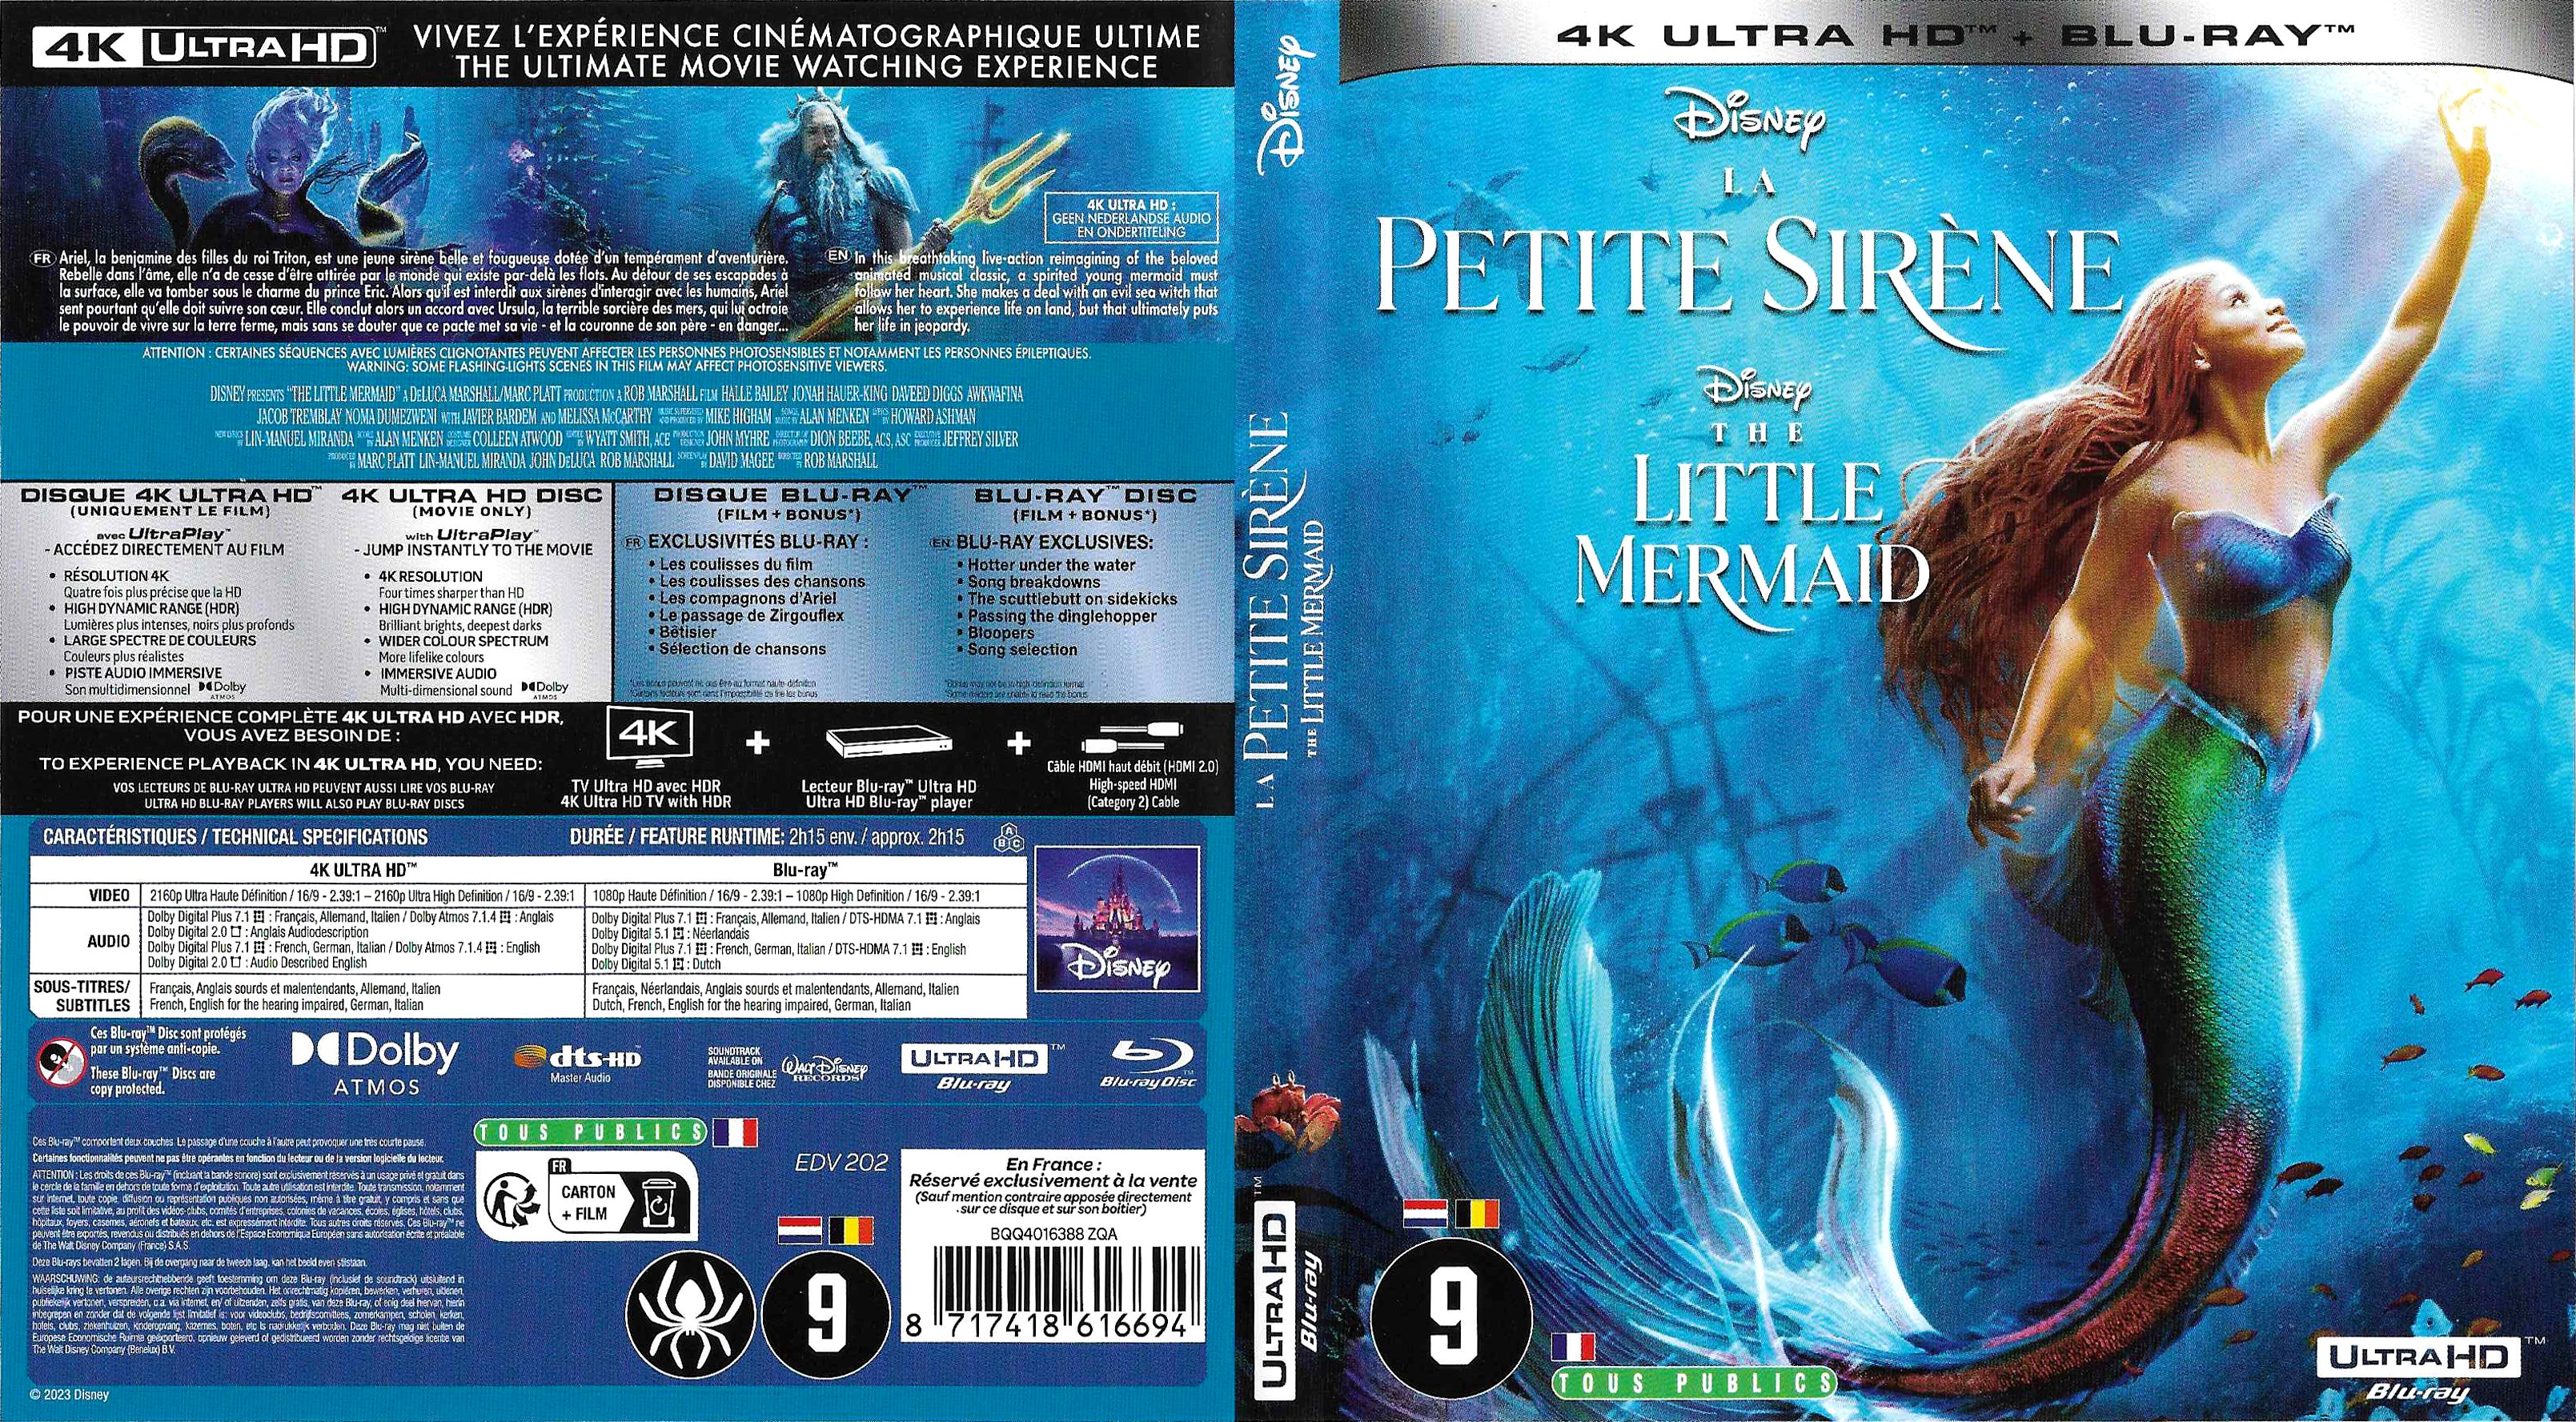 Jaquette DVD La petite sirne 2023 4K (BLU-RAY)